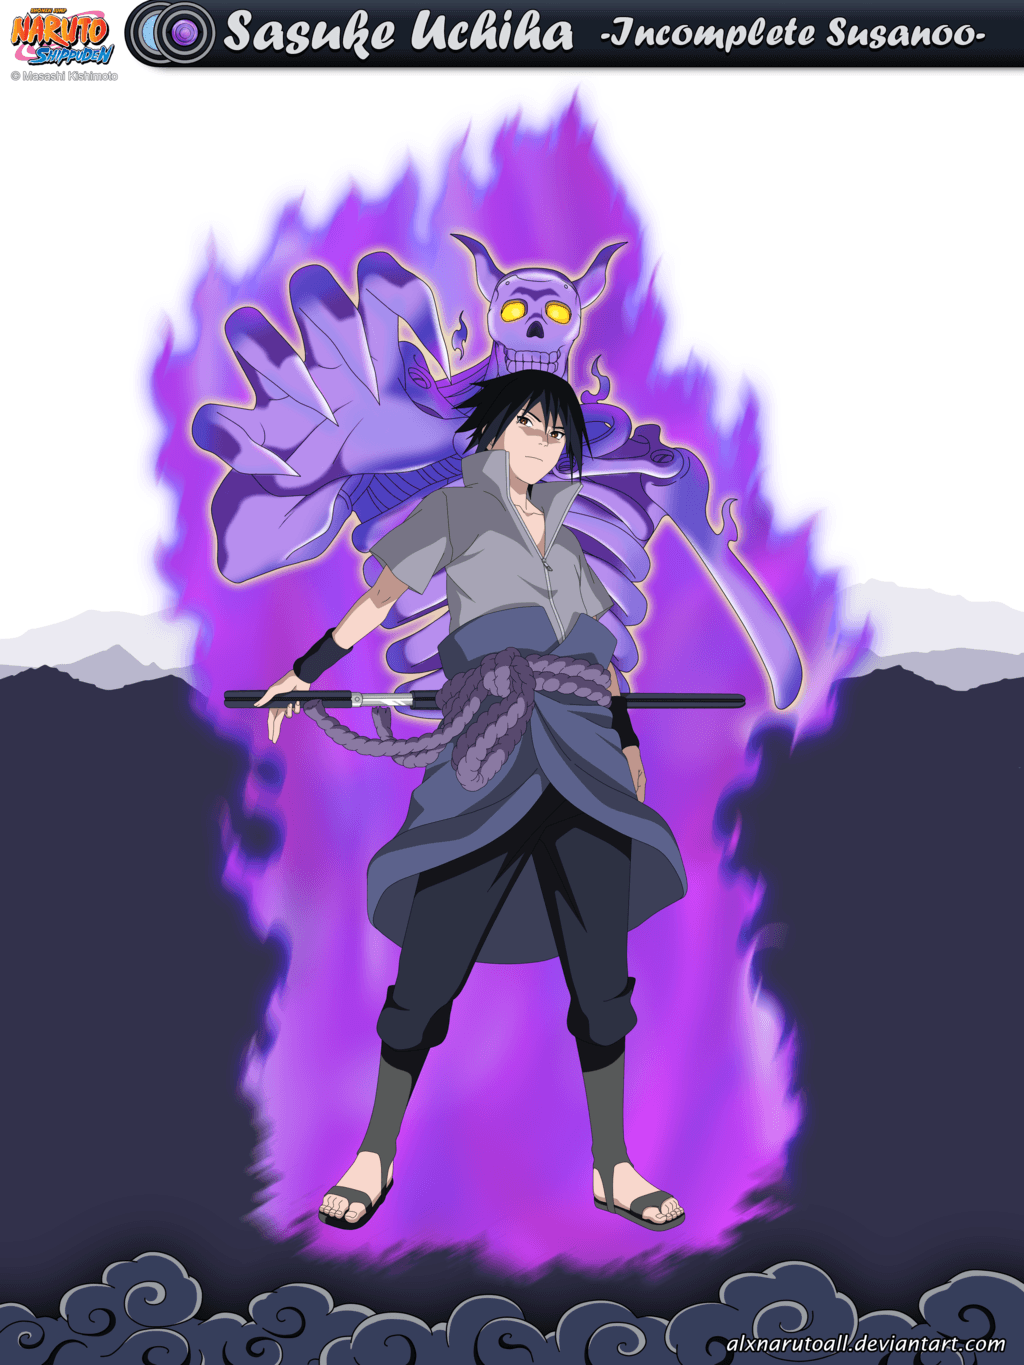 Sasuke Uchiha -Sasuke's incomplete Susanoo